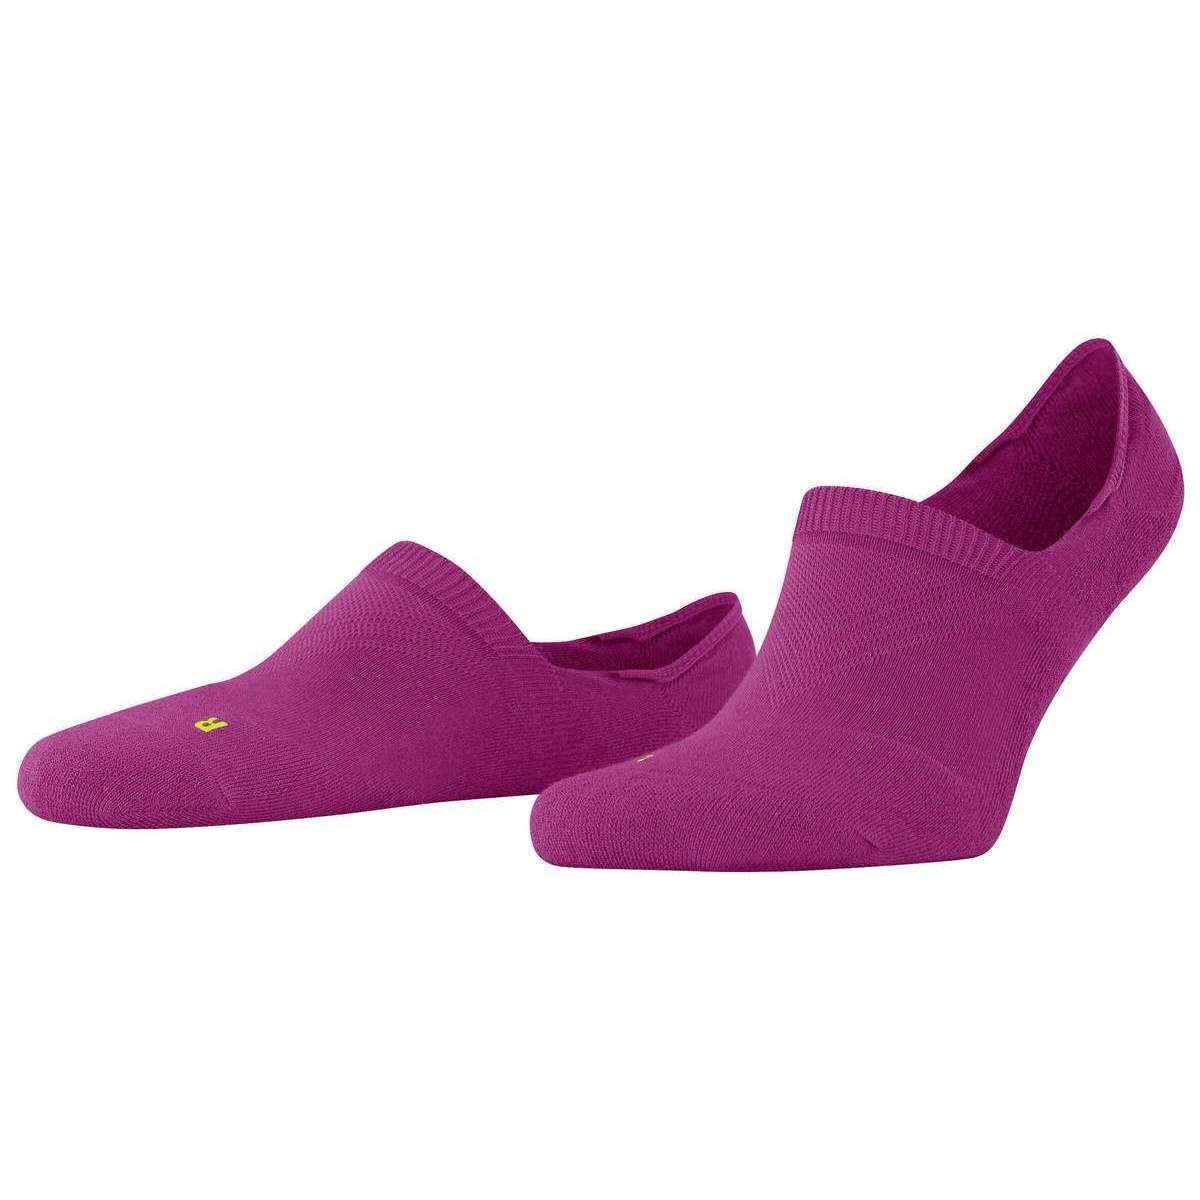 Falke Cool Kick No Show Socks - Radiant Orchid Pink